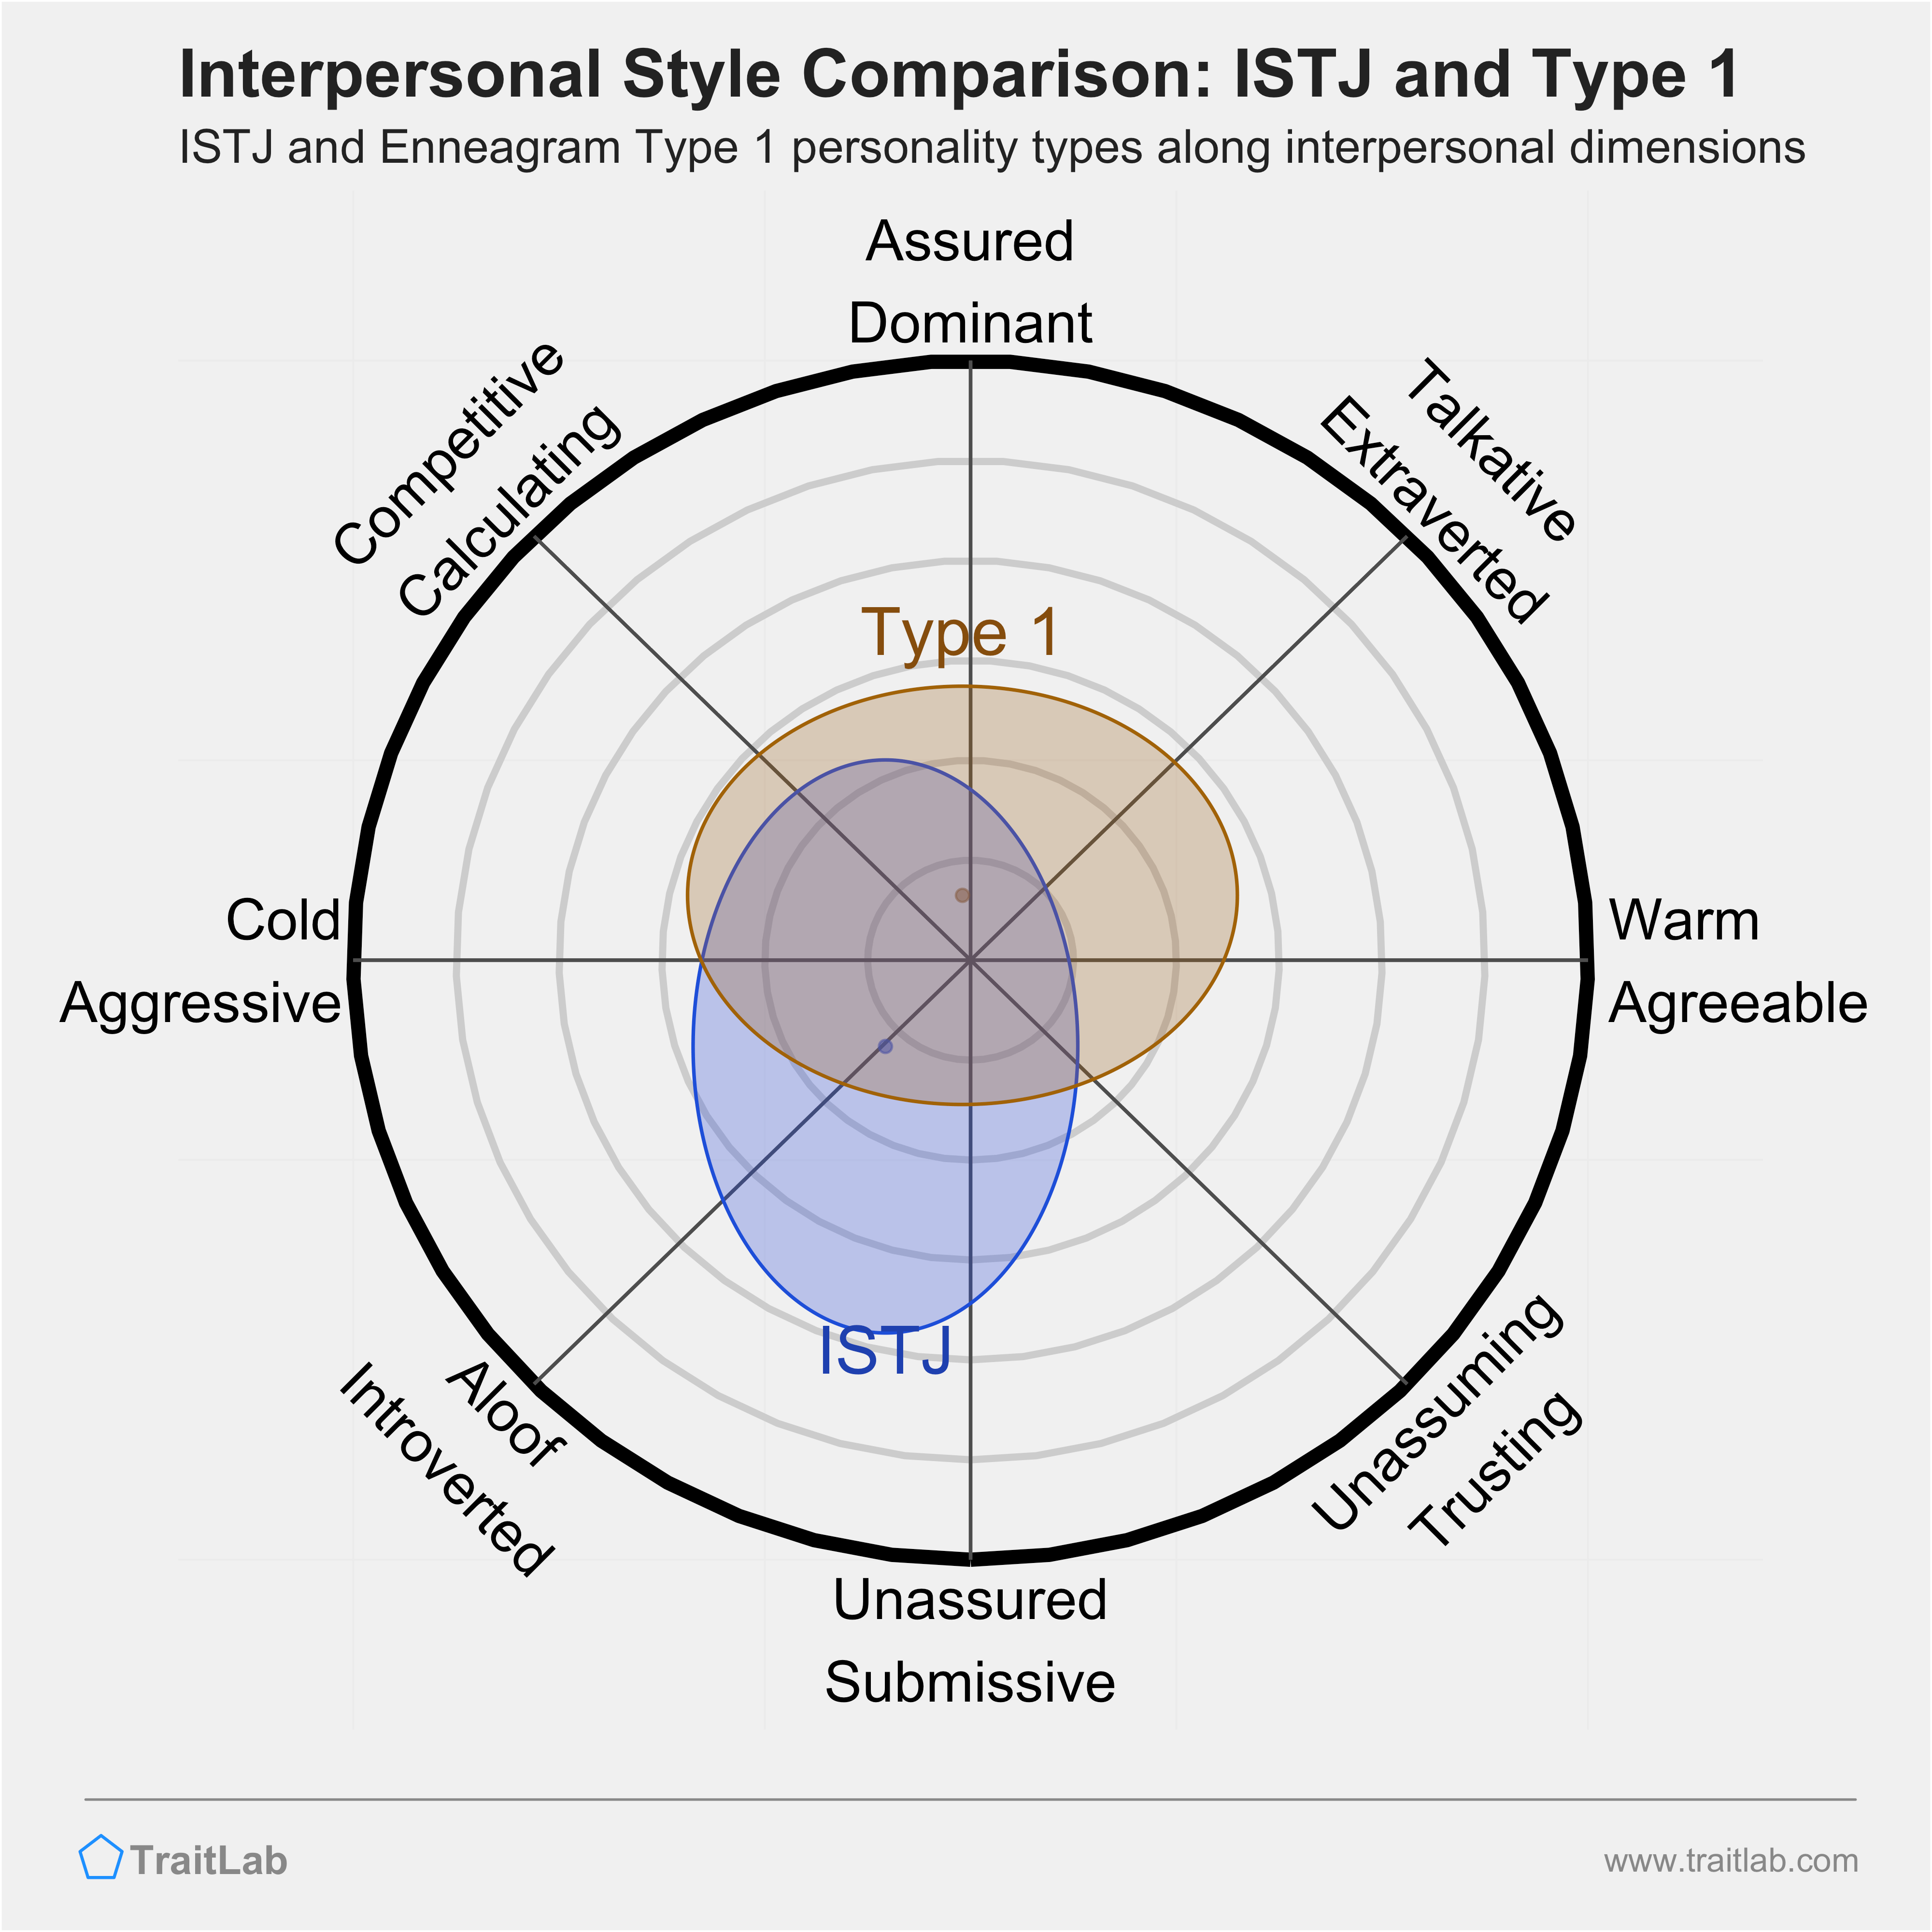 Enneagram ISTJ and Type 1 comparison across interpersonal dimensions